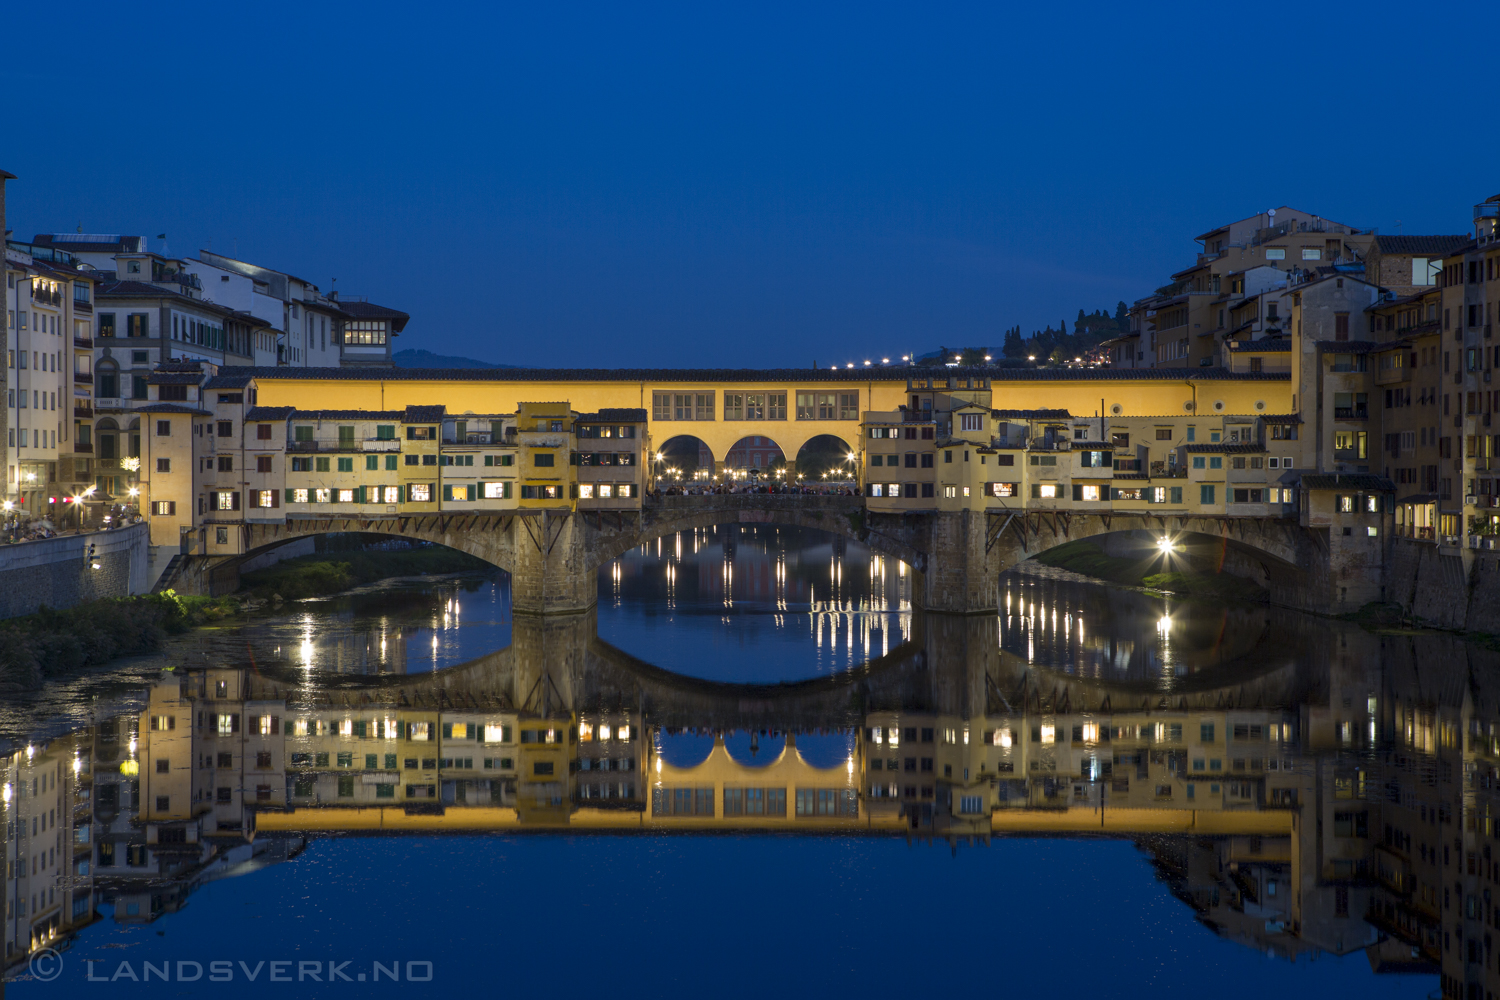 Ponte Vecchio, Florence, Italy. 

(Canon EOS 5D Mark III / Canon EF 24-70mm f/2.8 L USM)